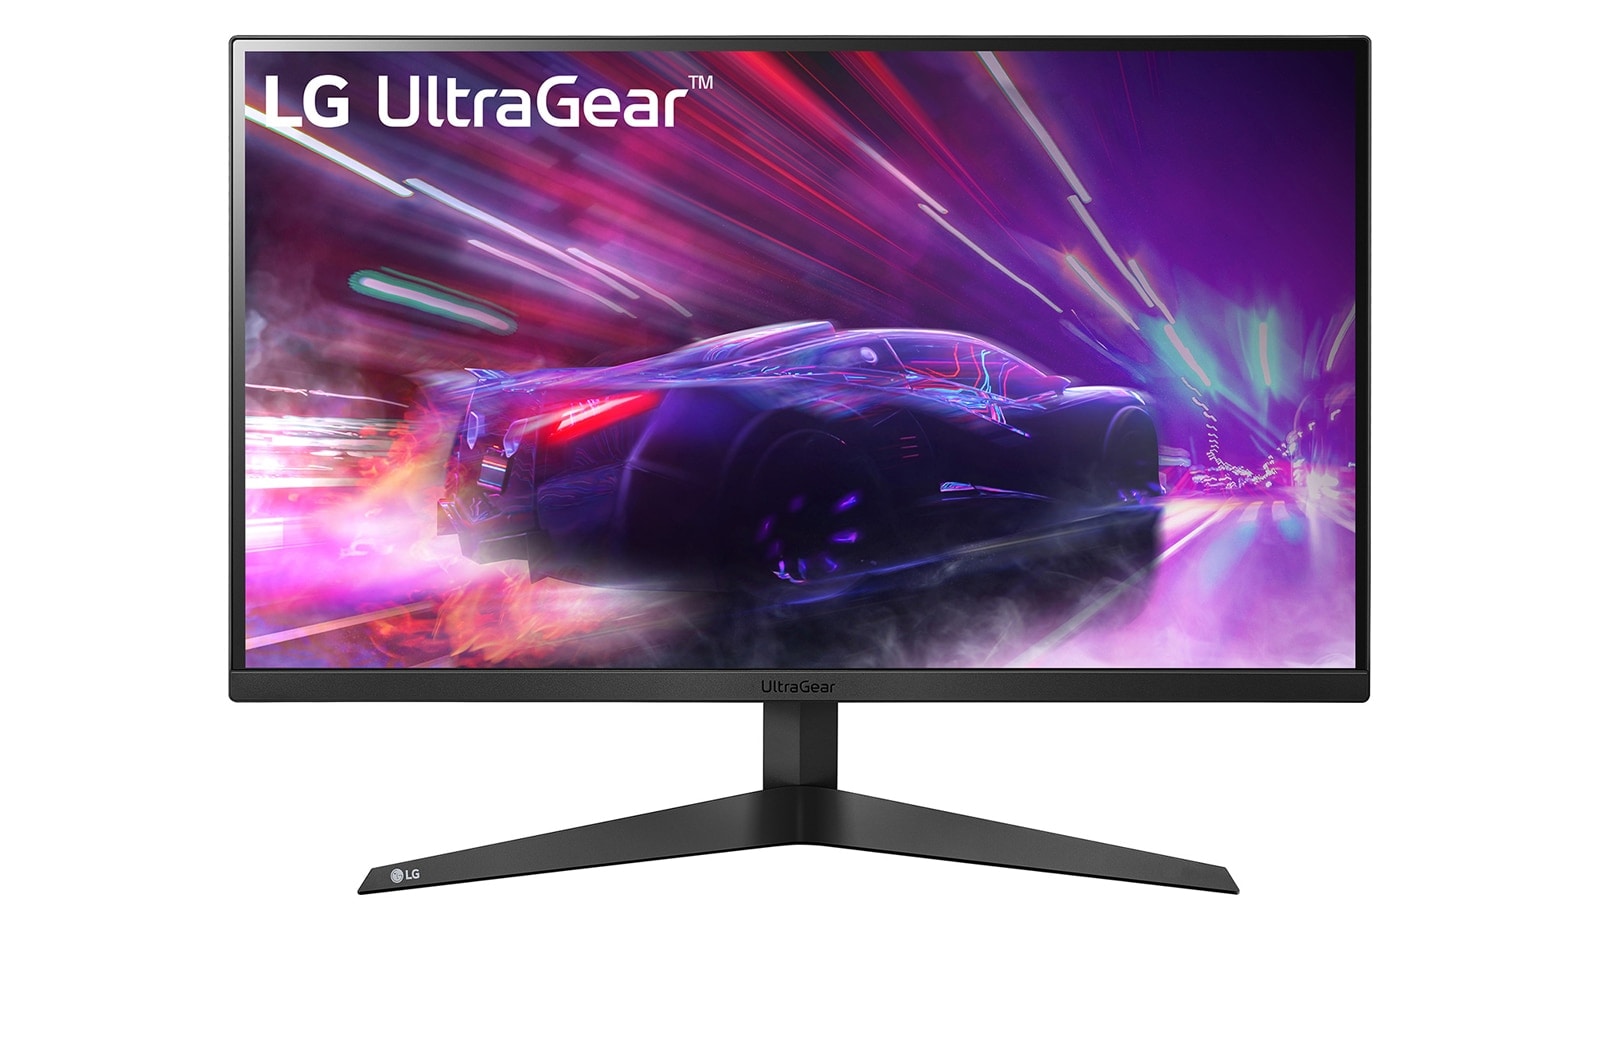 LG 27” UltraGear™ Full HD Gaming Monitor